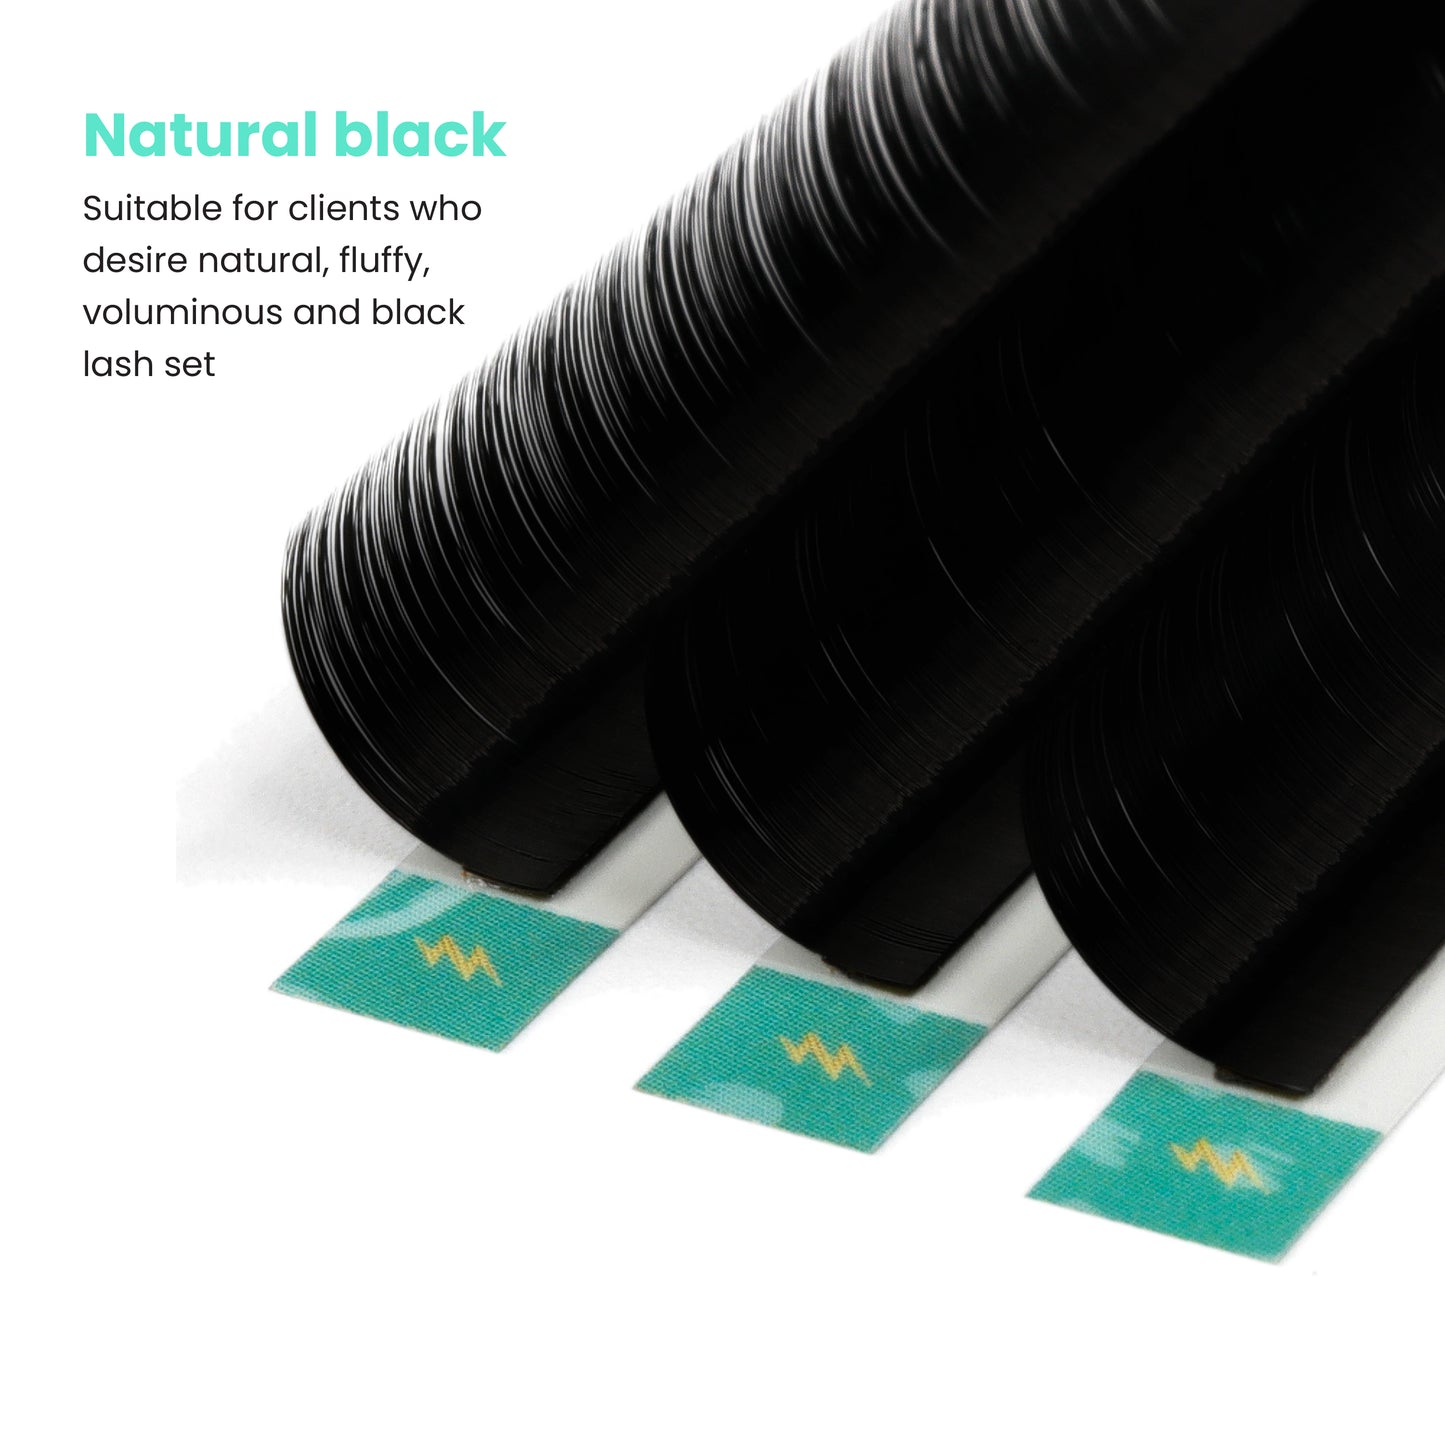 Velvet Mink - Volume Lashes - Natural black -wholesale Velvet lash extension manufacturer & retailer